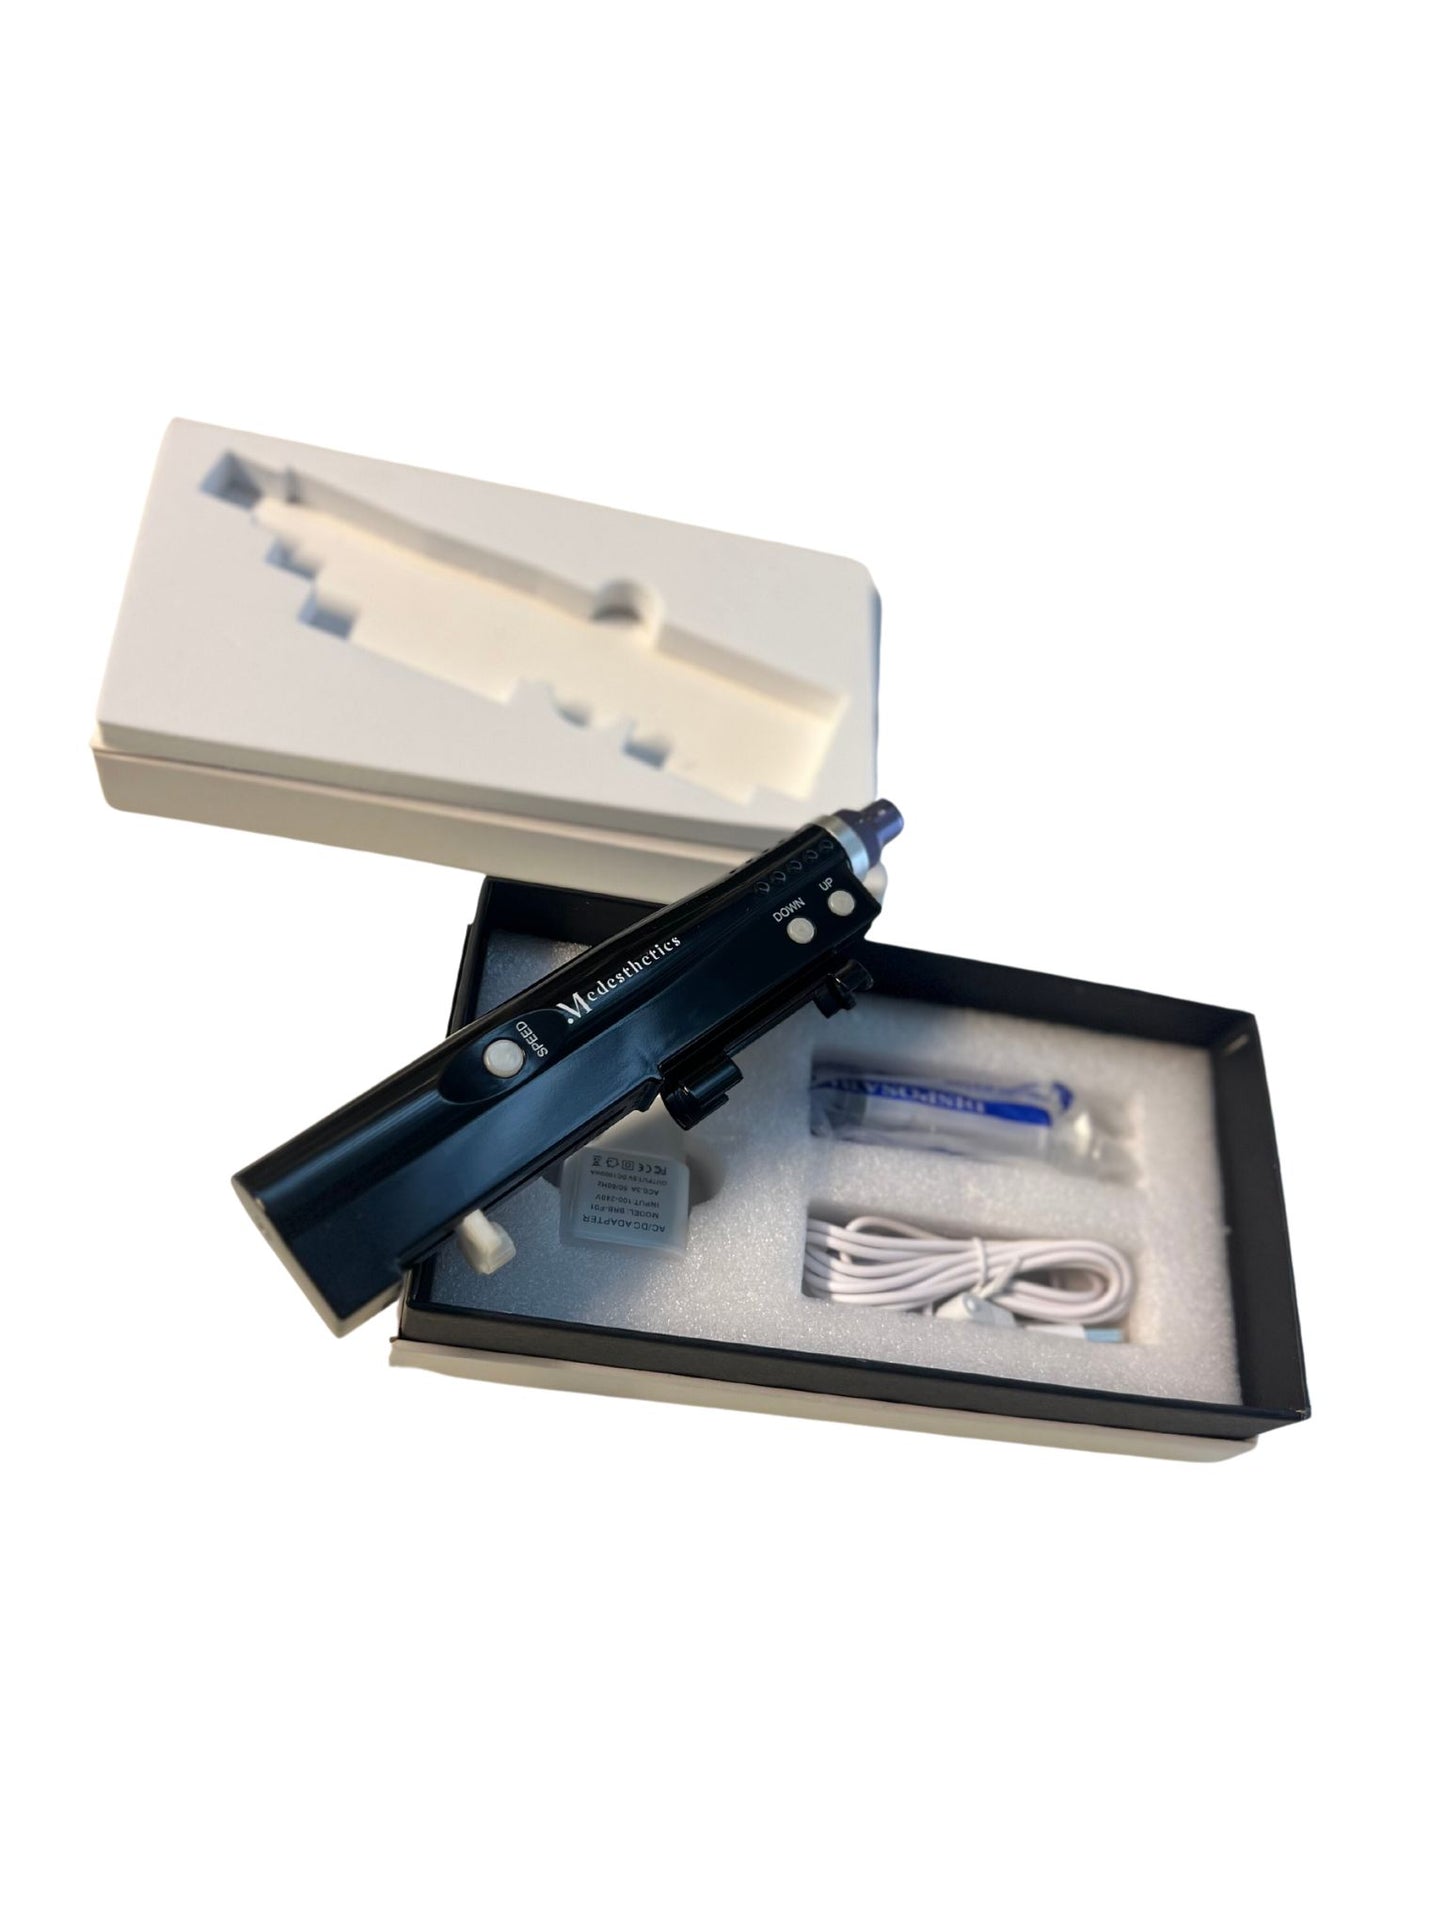 Medesthetics Microneedling Pen